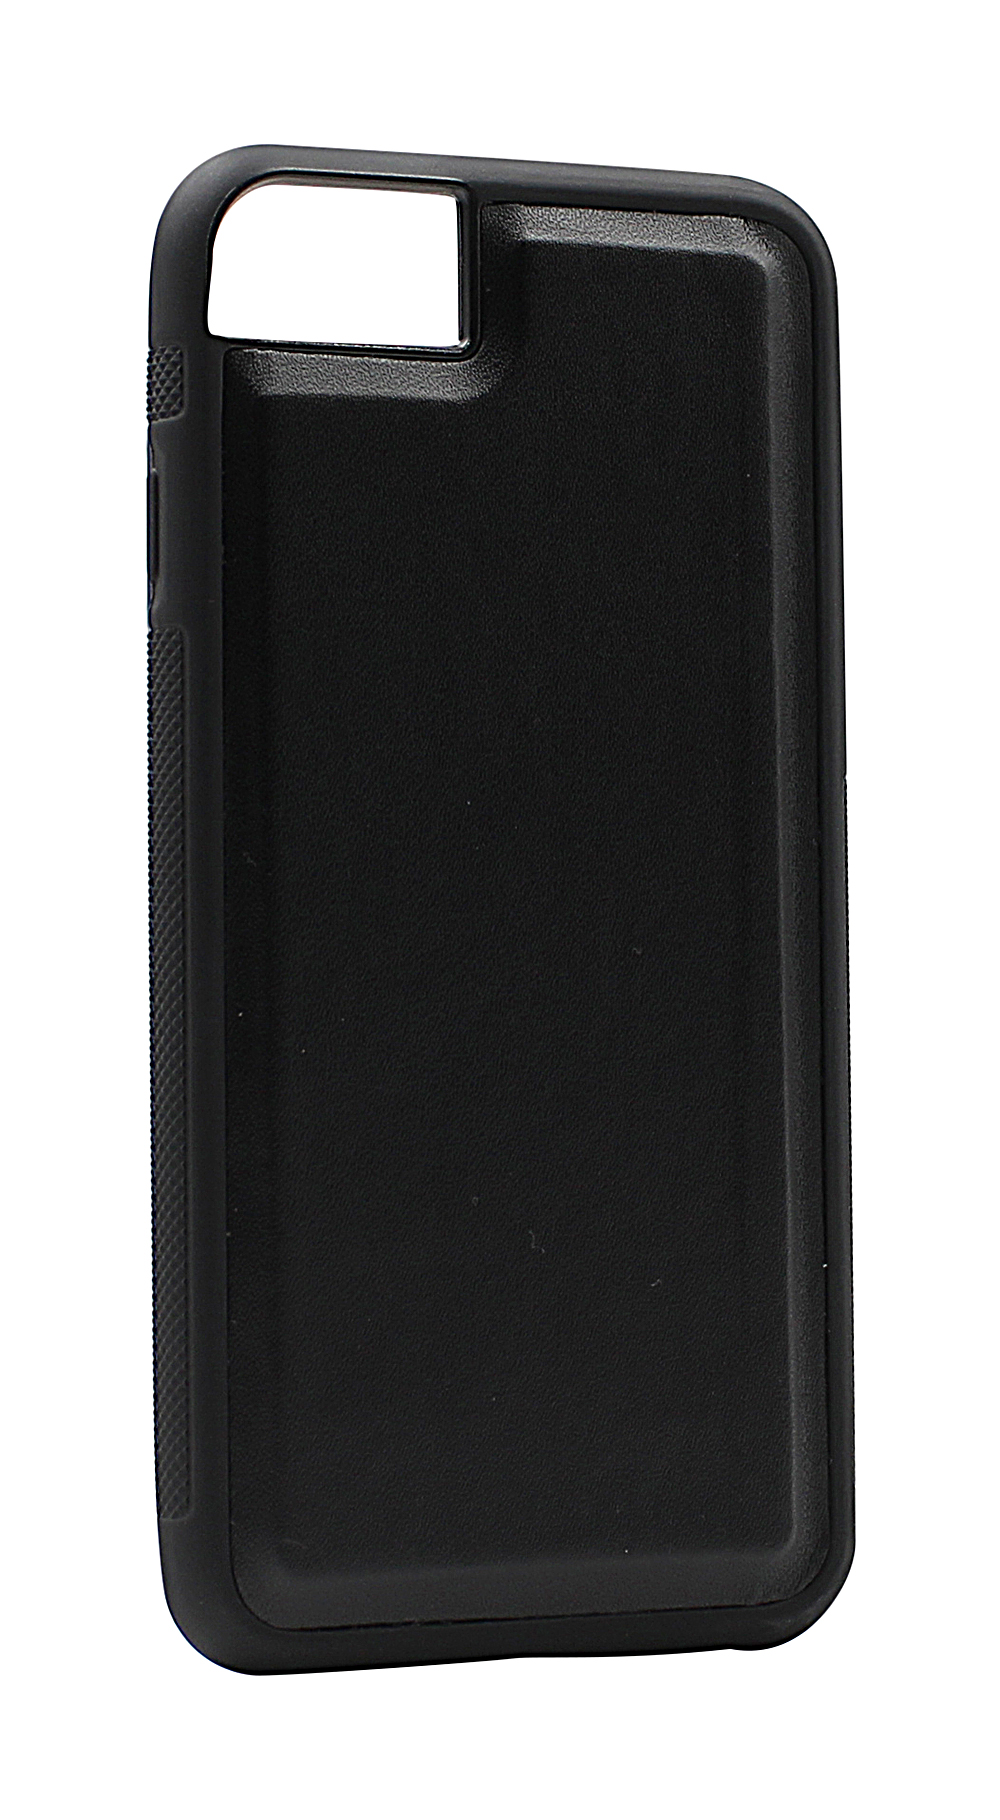 Skimblocker Magnet Wallet iPhone 8